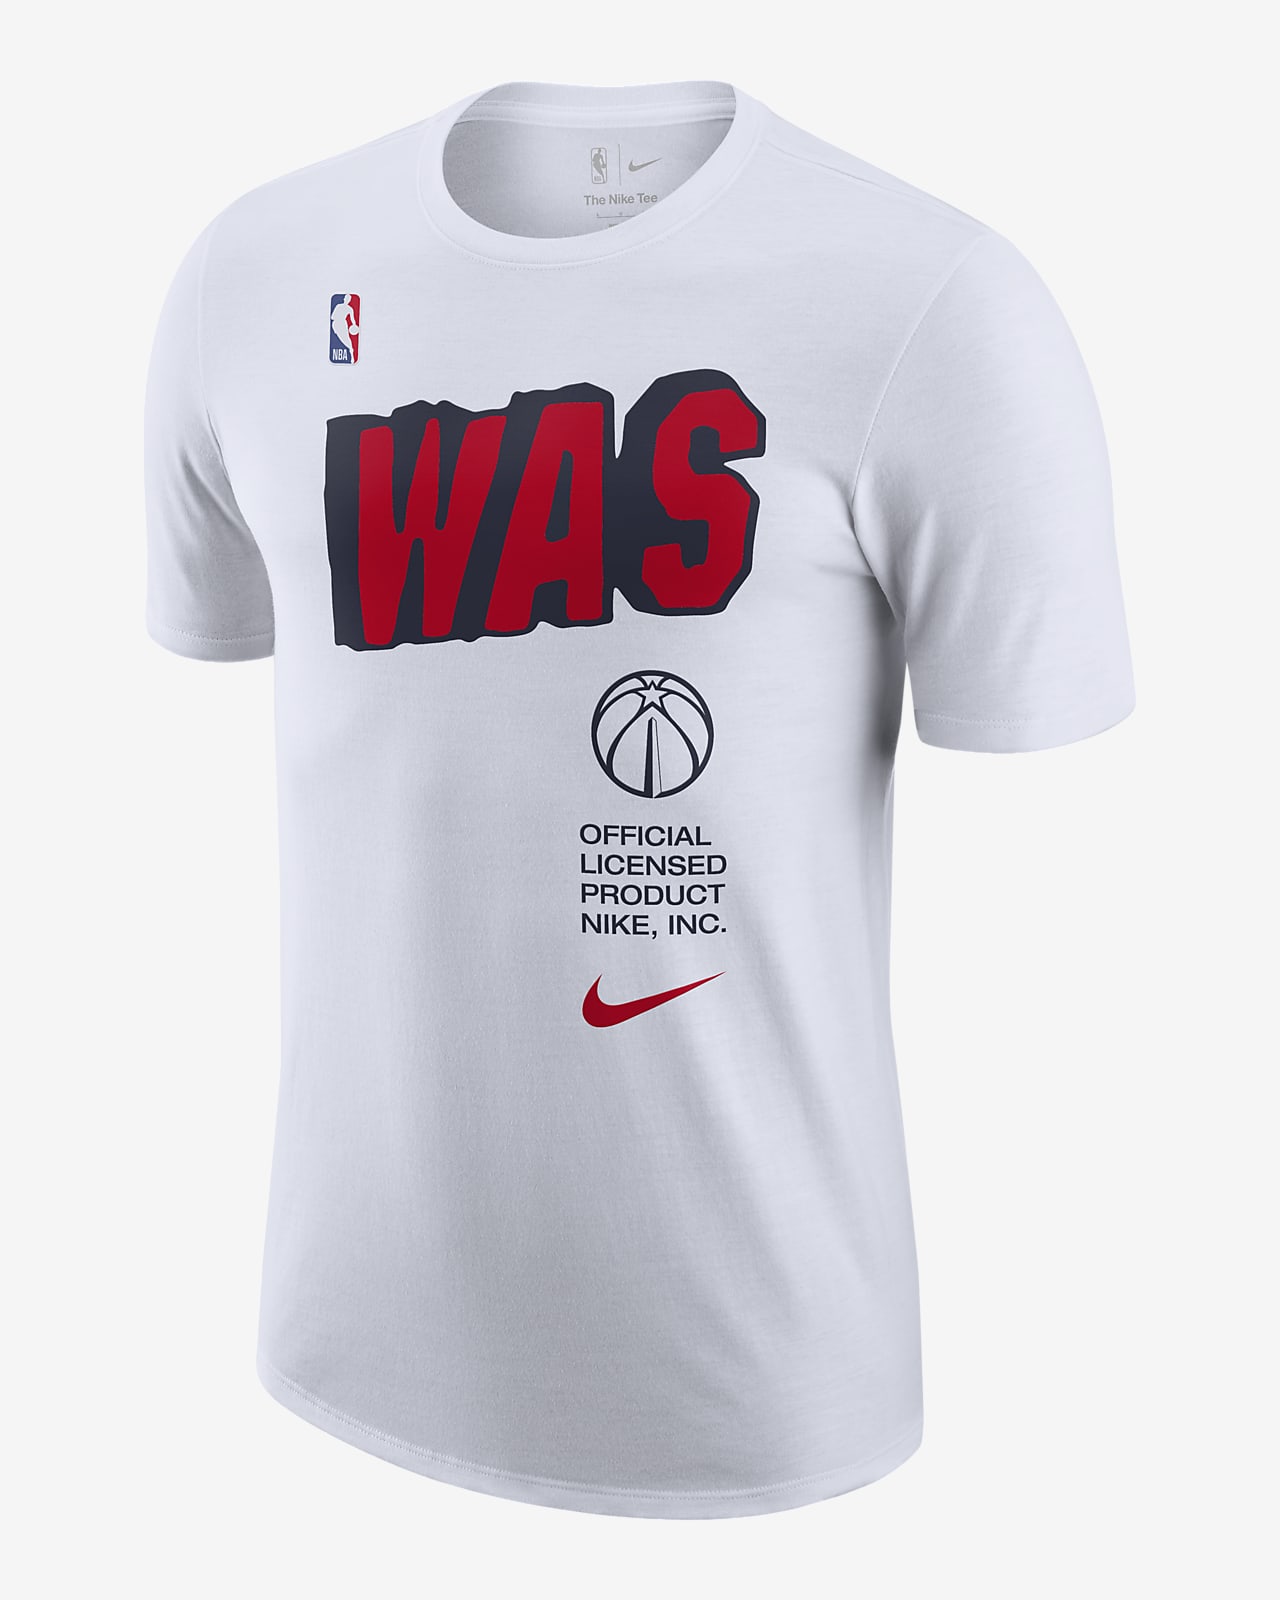 Washington Wizards Men's NBA T-Shirt.